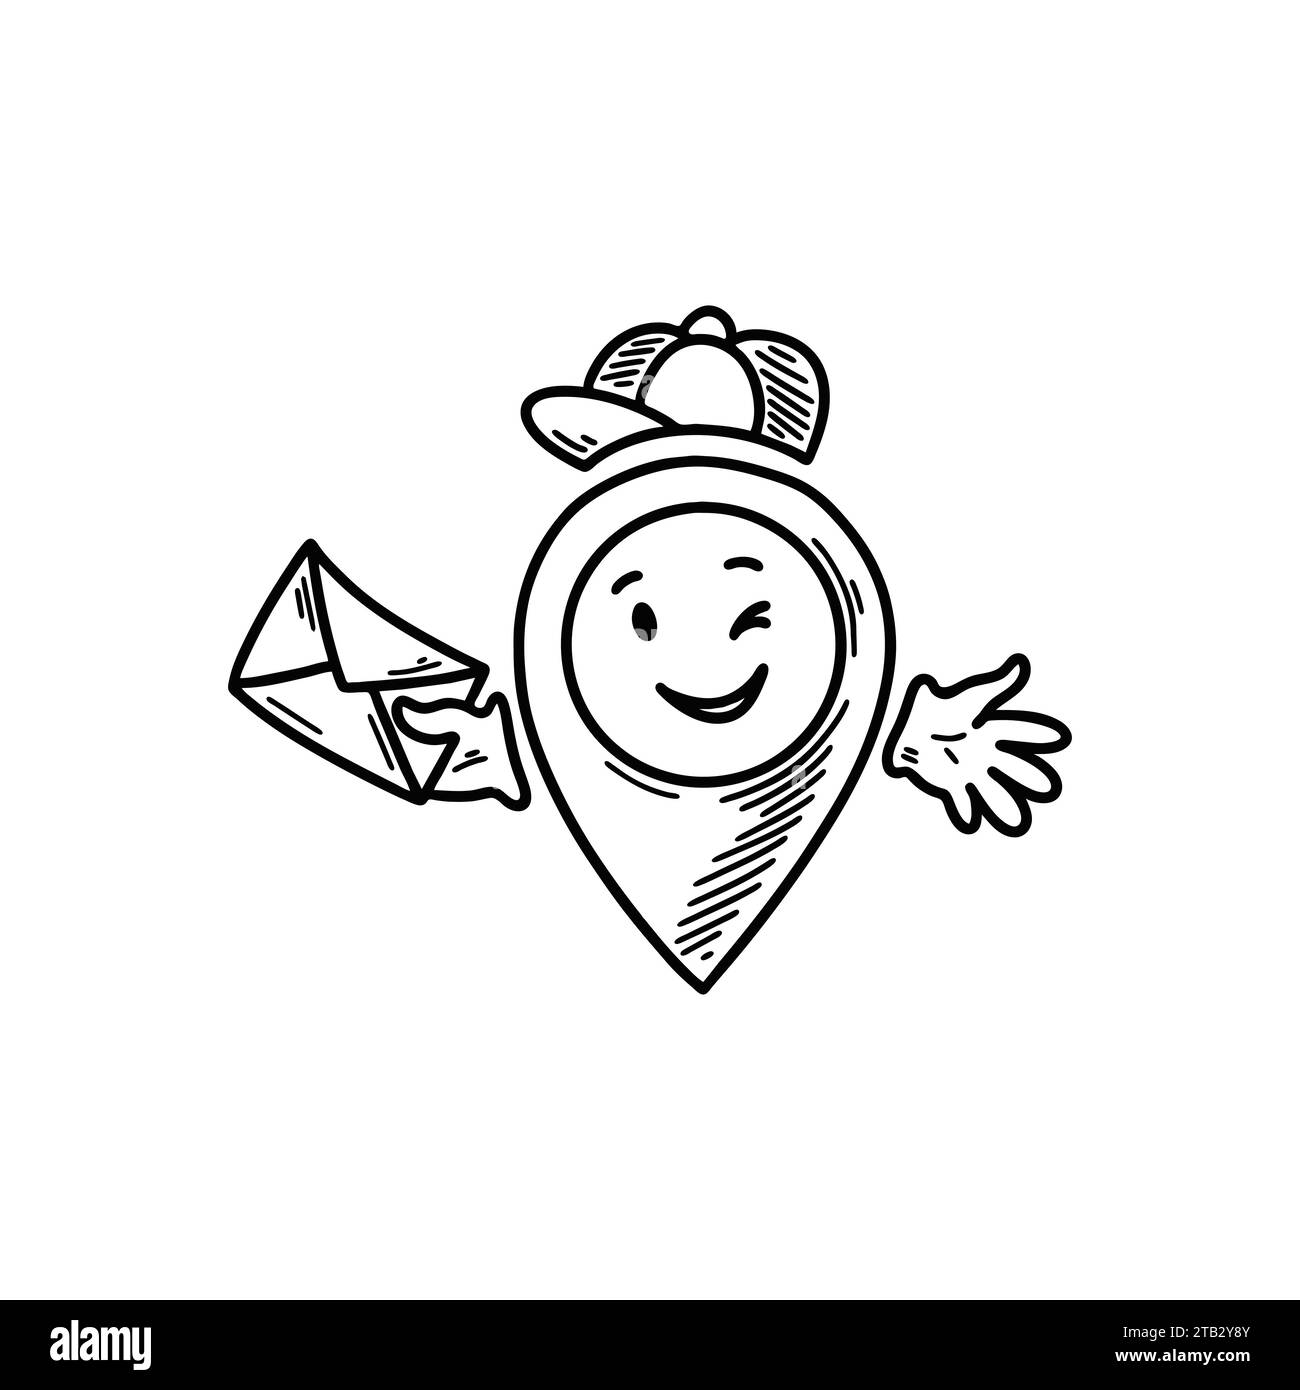 Niedliches Line Doodle Delivery Office Standort Pin Emoji. Freihandskizze Pinpoint. Kartenadresse Comic Emoticon. Lächelnder lustiger Charakter Stock Vektor